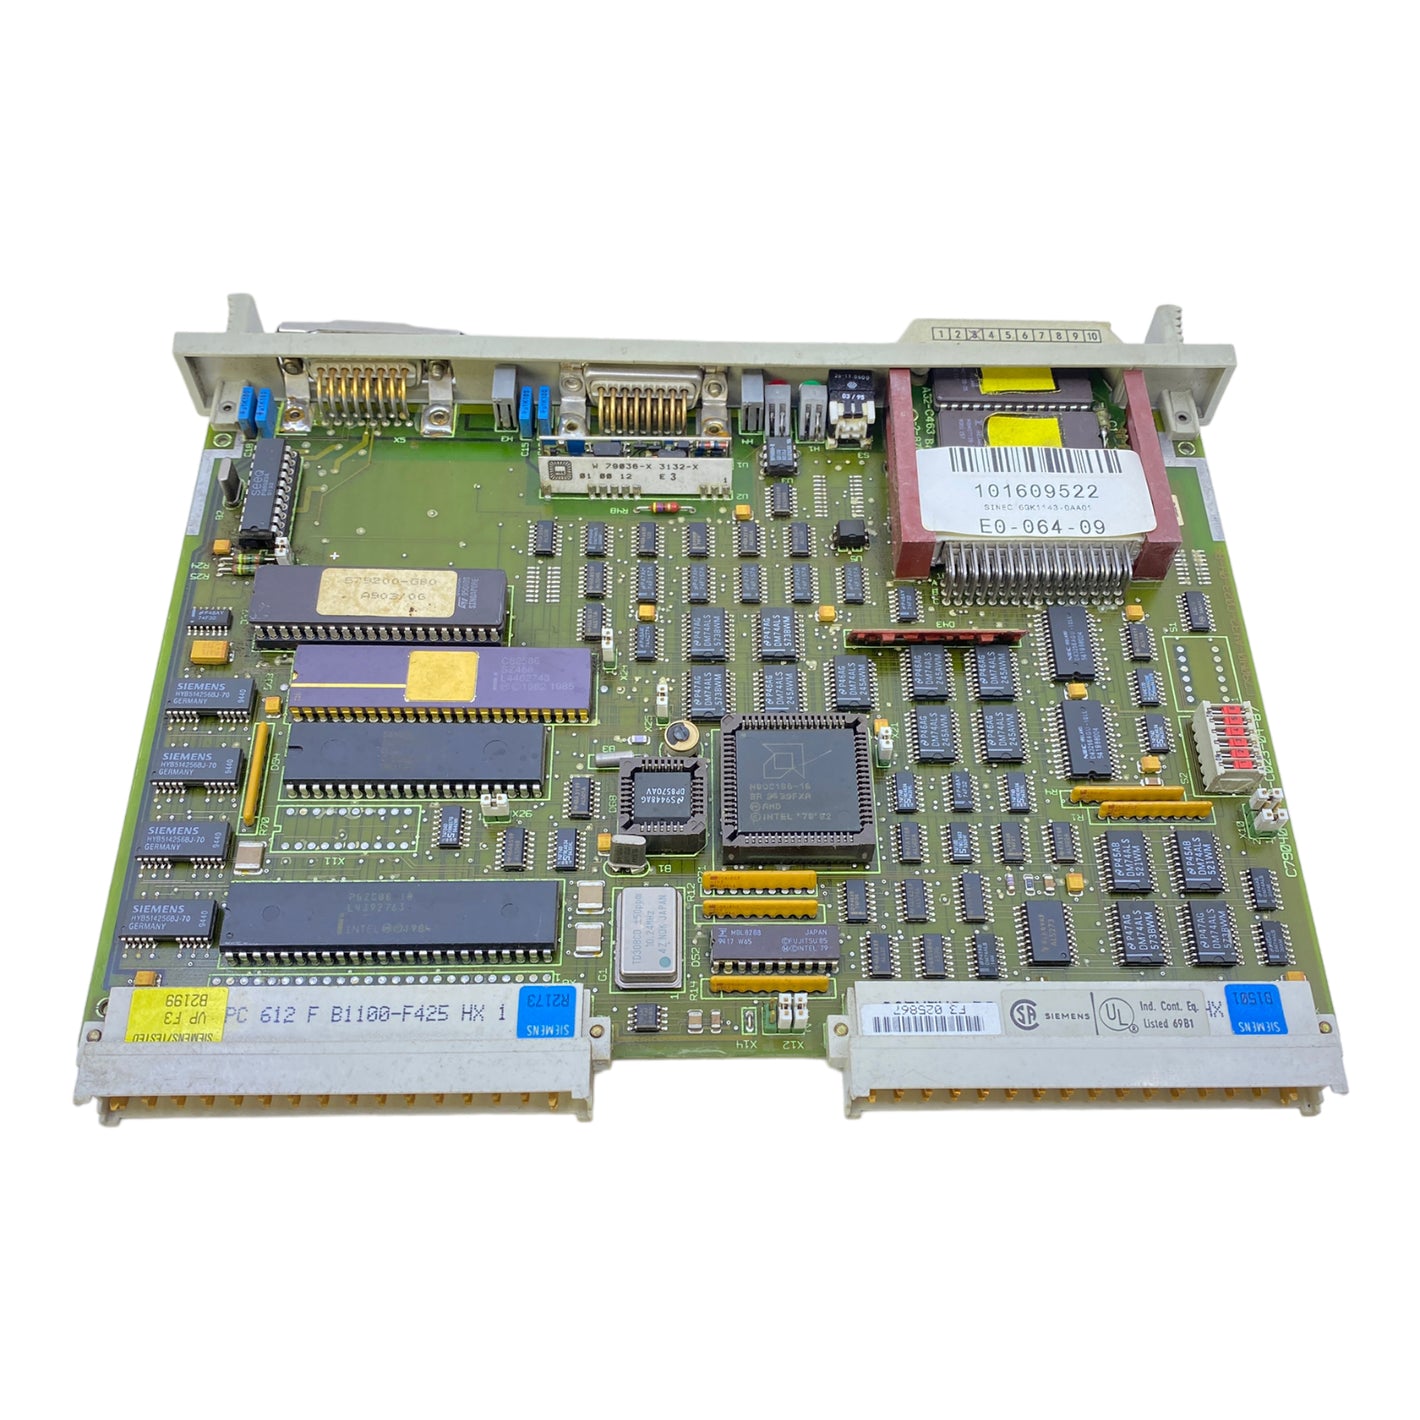 Siemens 6GK1143-0AB00 communications processor 